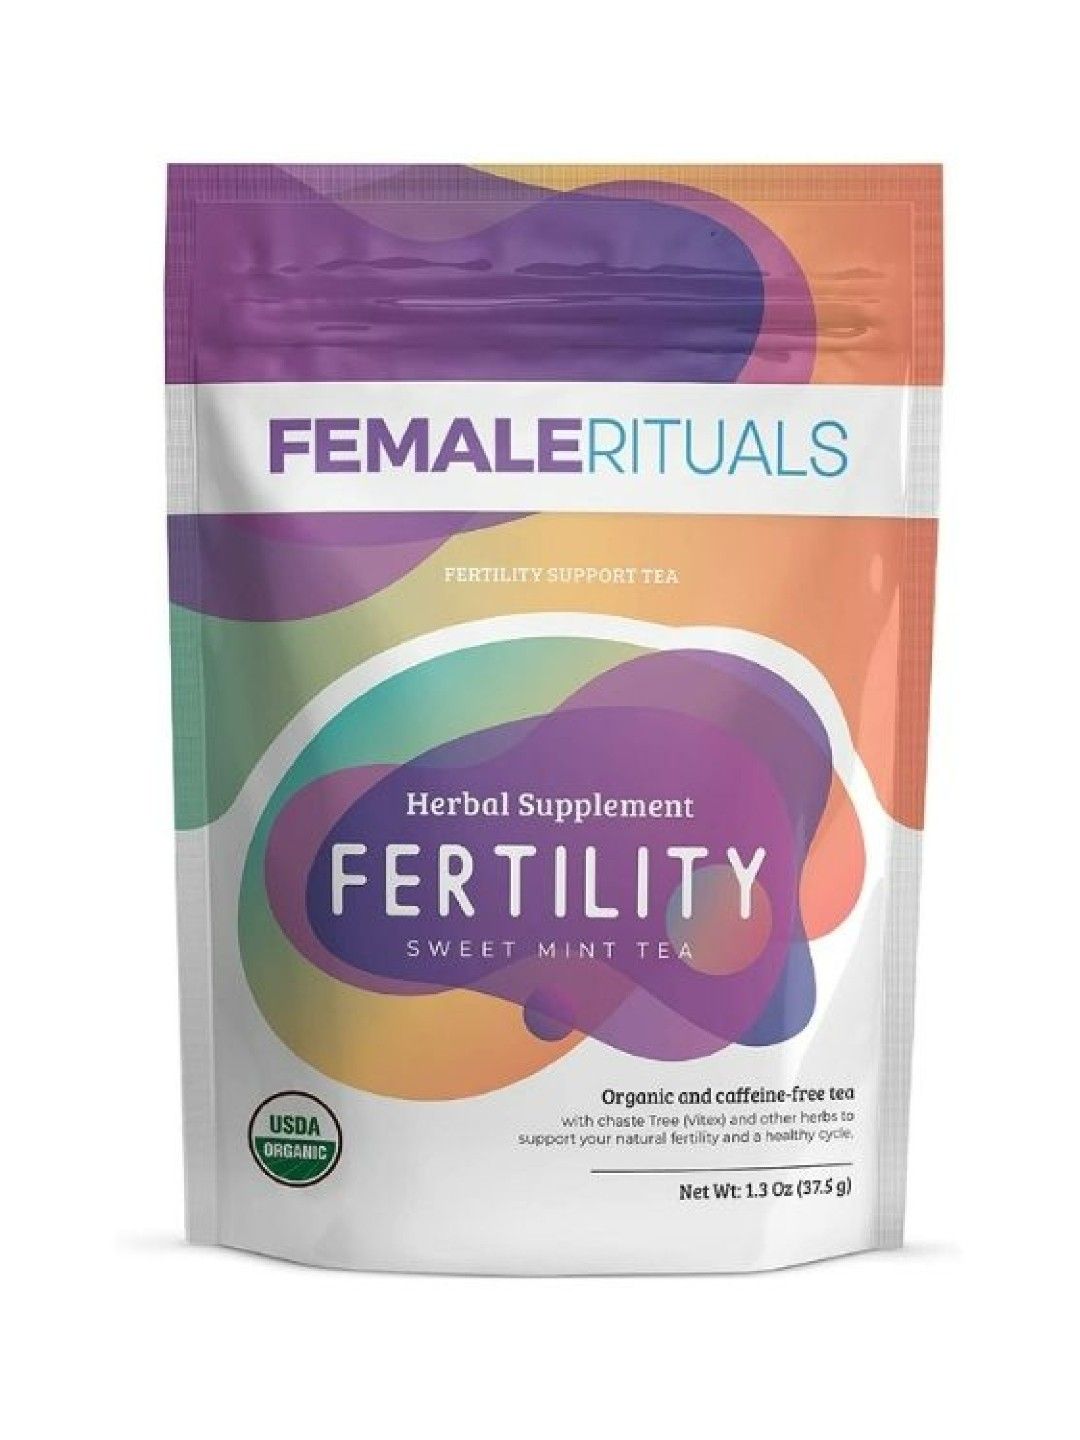 Female Rituals Fertility Tea (30s)